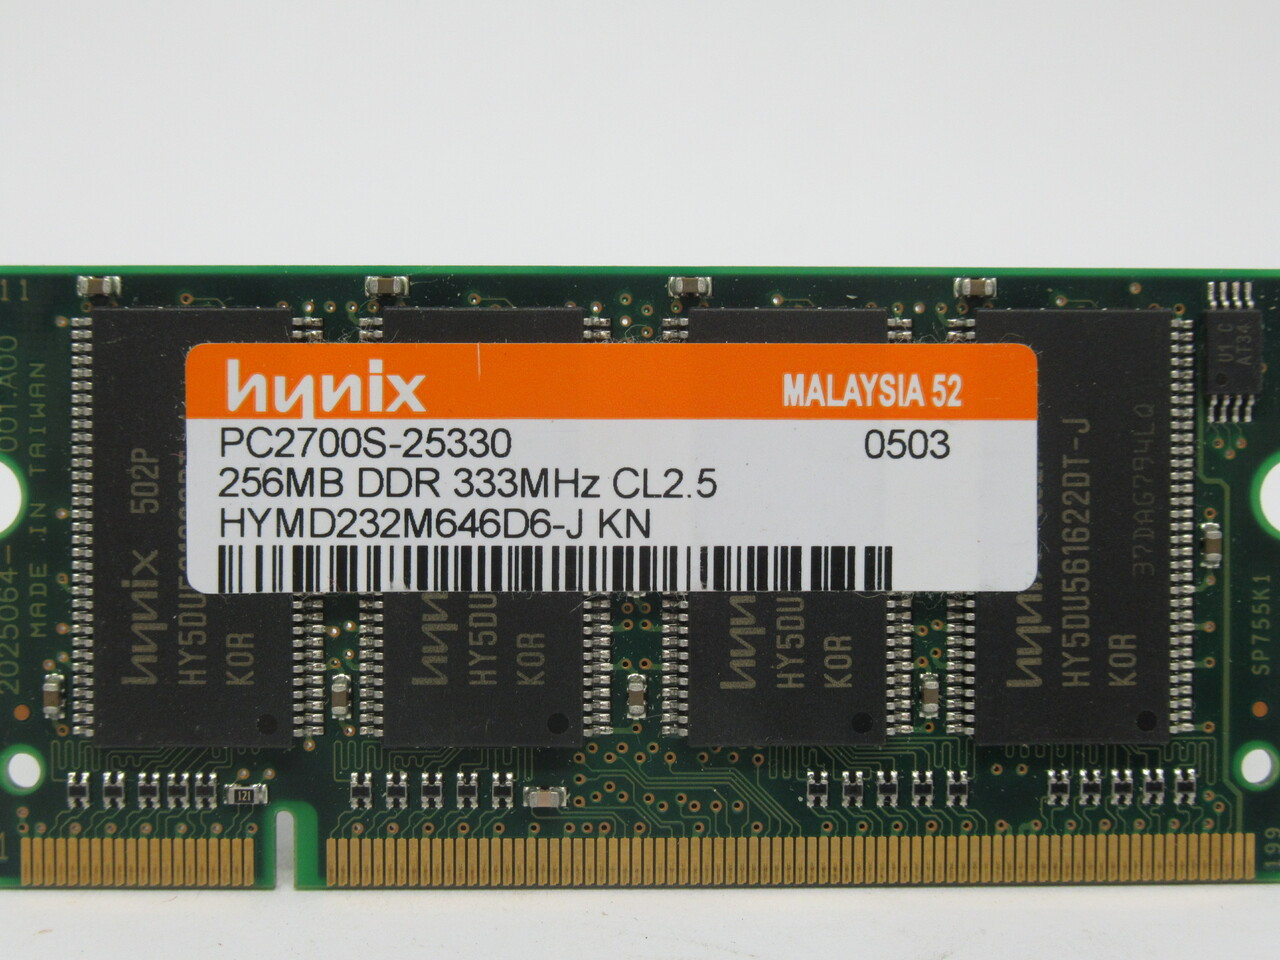 Hynix HYMD232M646D6-J KN SDRam Memory Module 256MB 333MHz USED